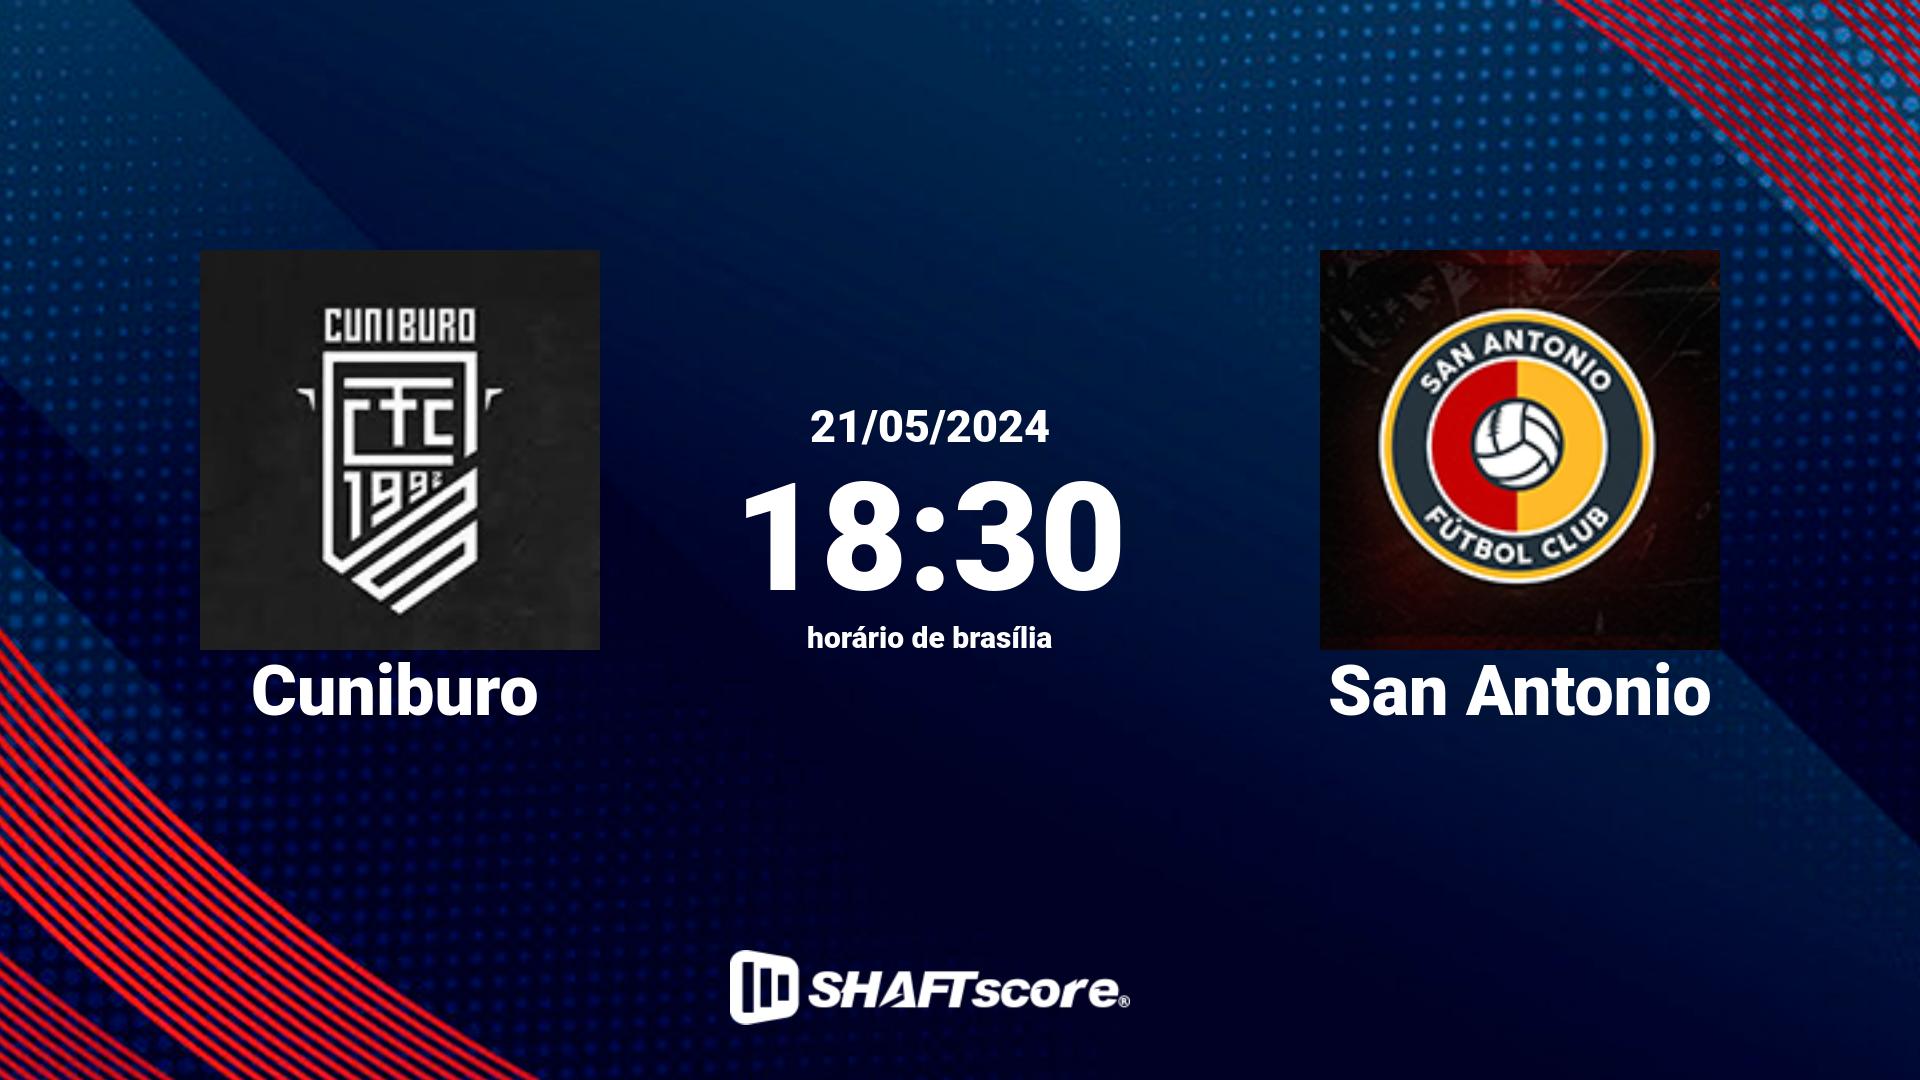 Estatísticas do jogo Cuniburo vs San Antonio 21.05 18:30